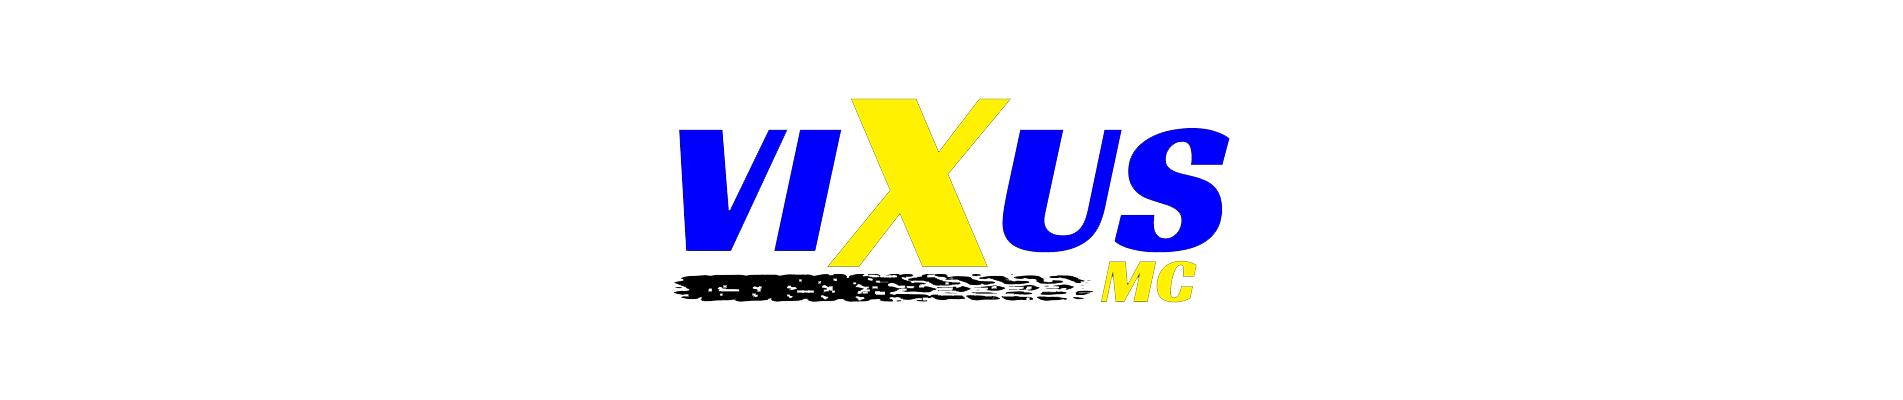 Vixus MC logotyp